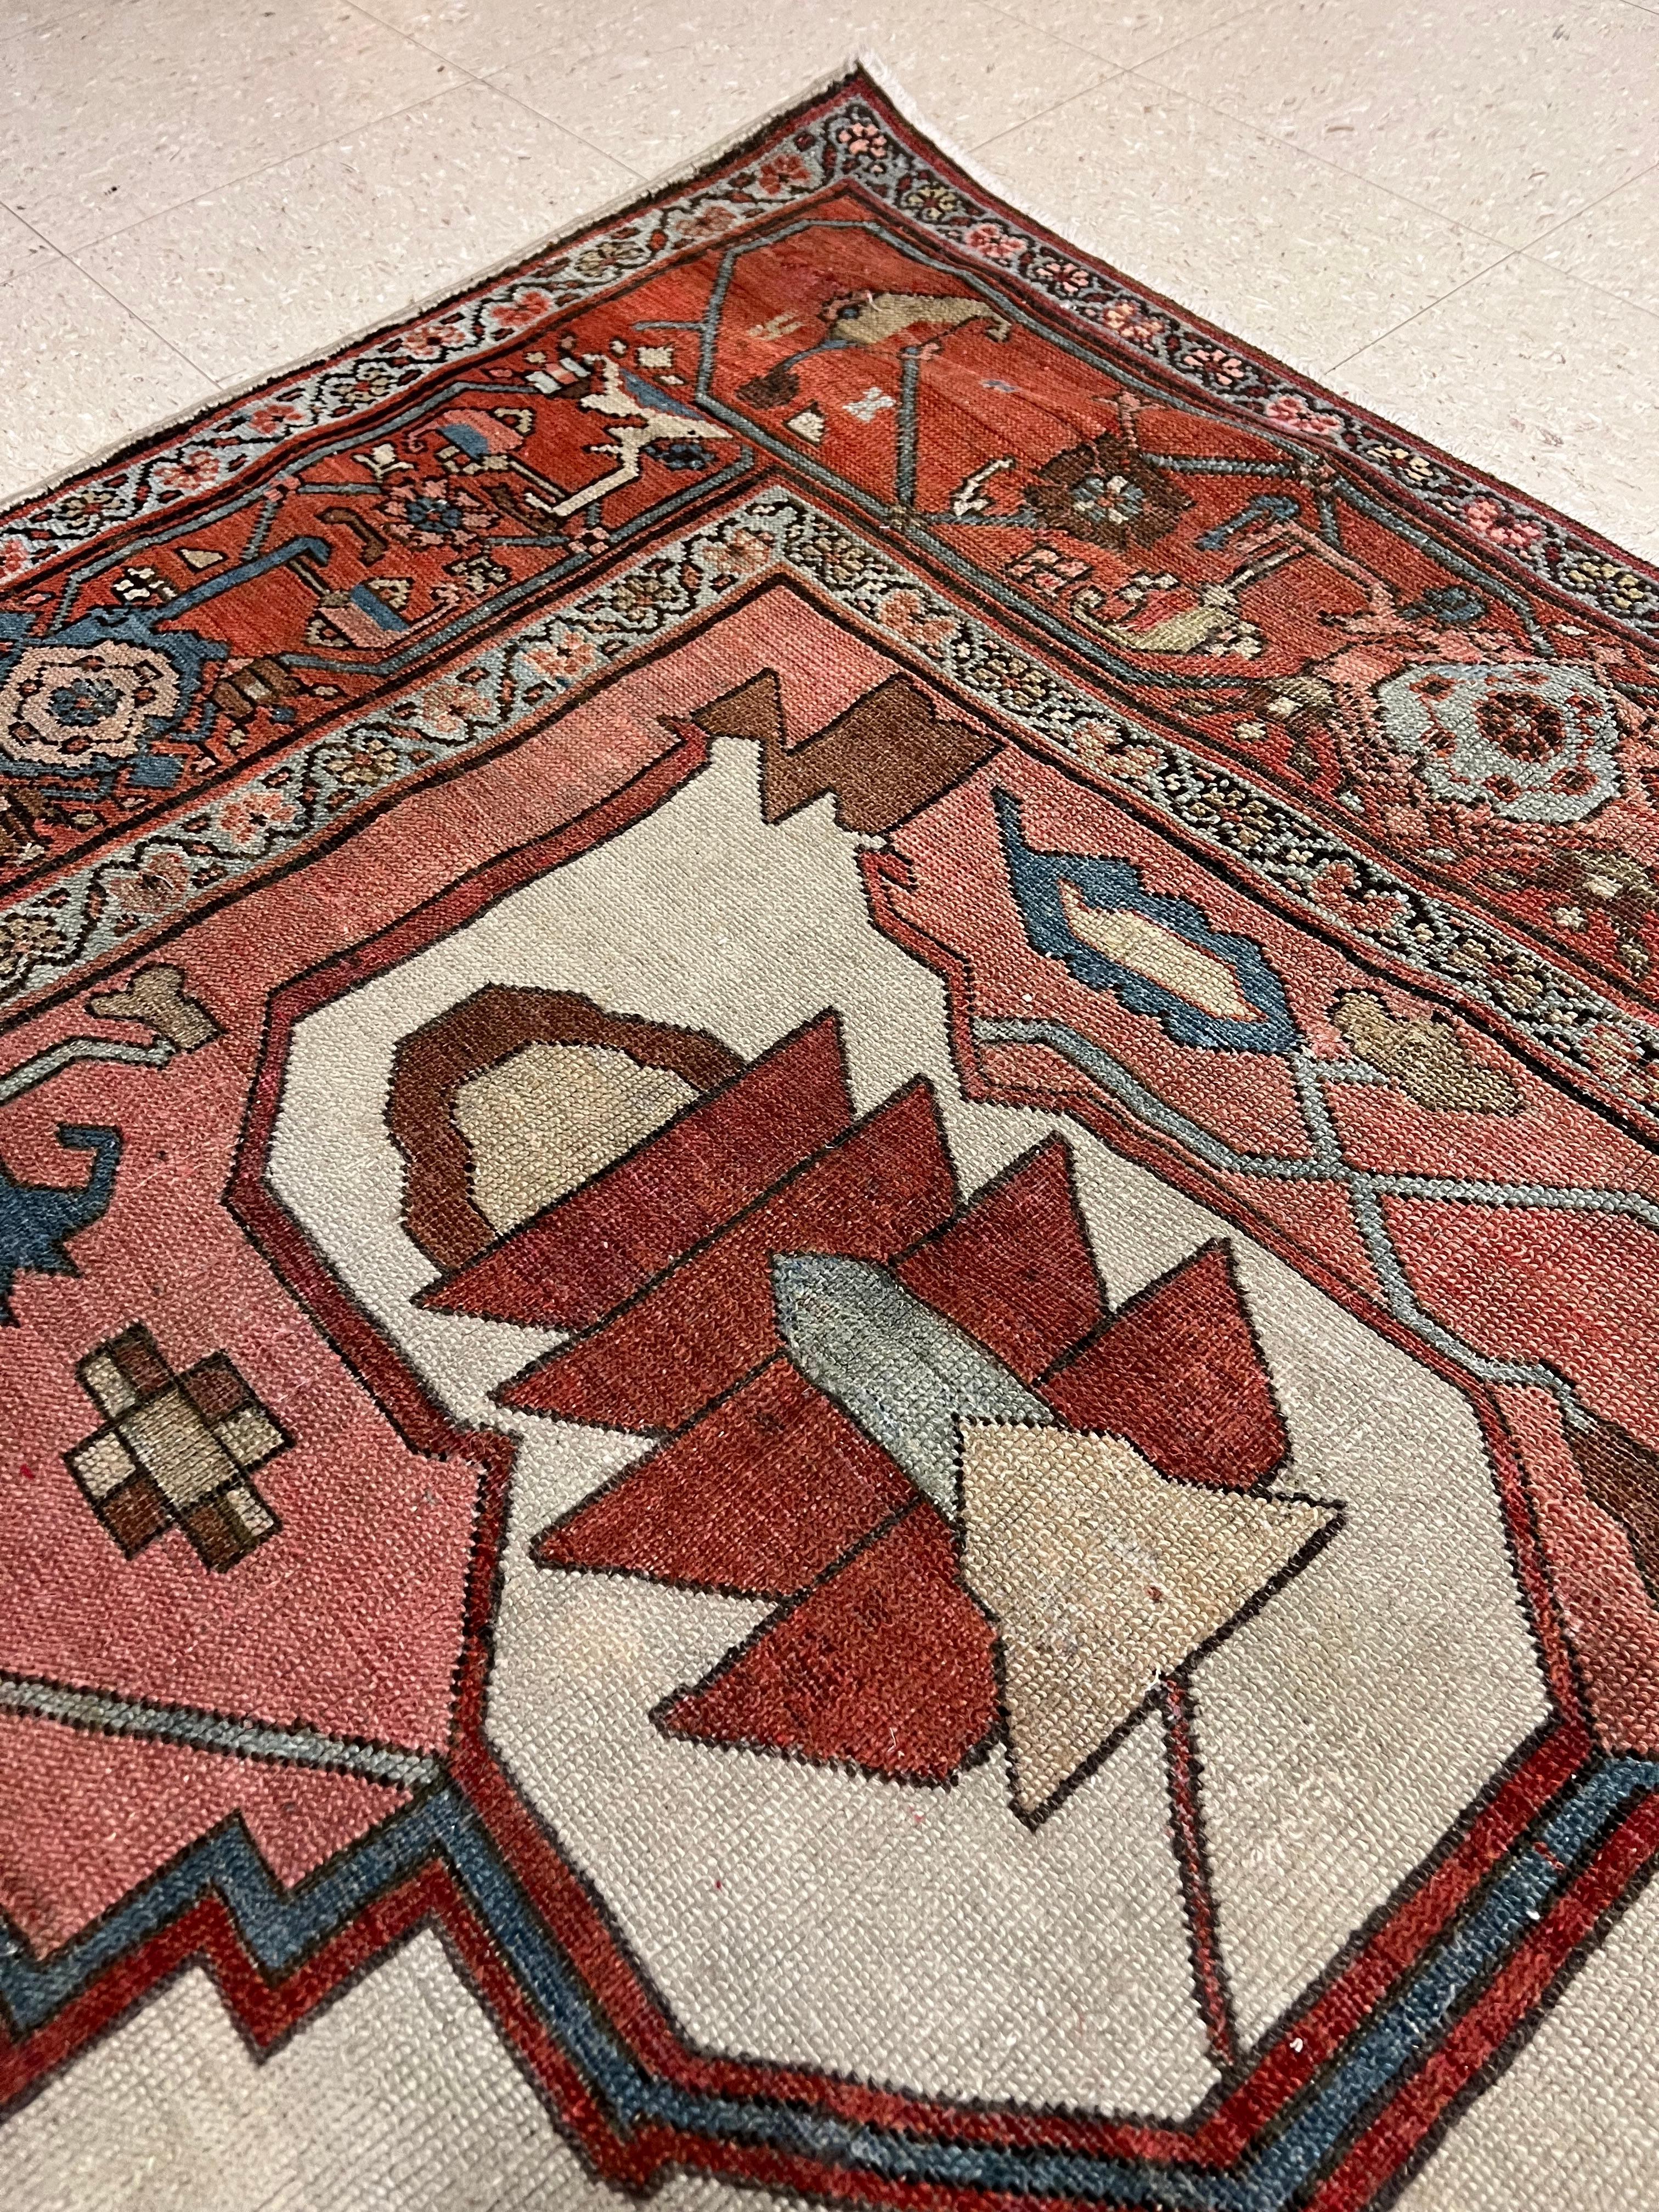 Antique Persian Serapi Carpet, Handmade, Oriental Rug, Rust, Ivory, Light Blue For Sale 3